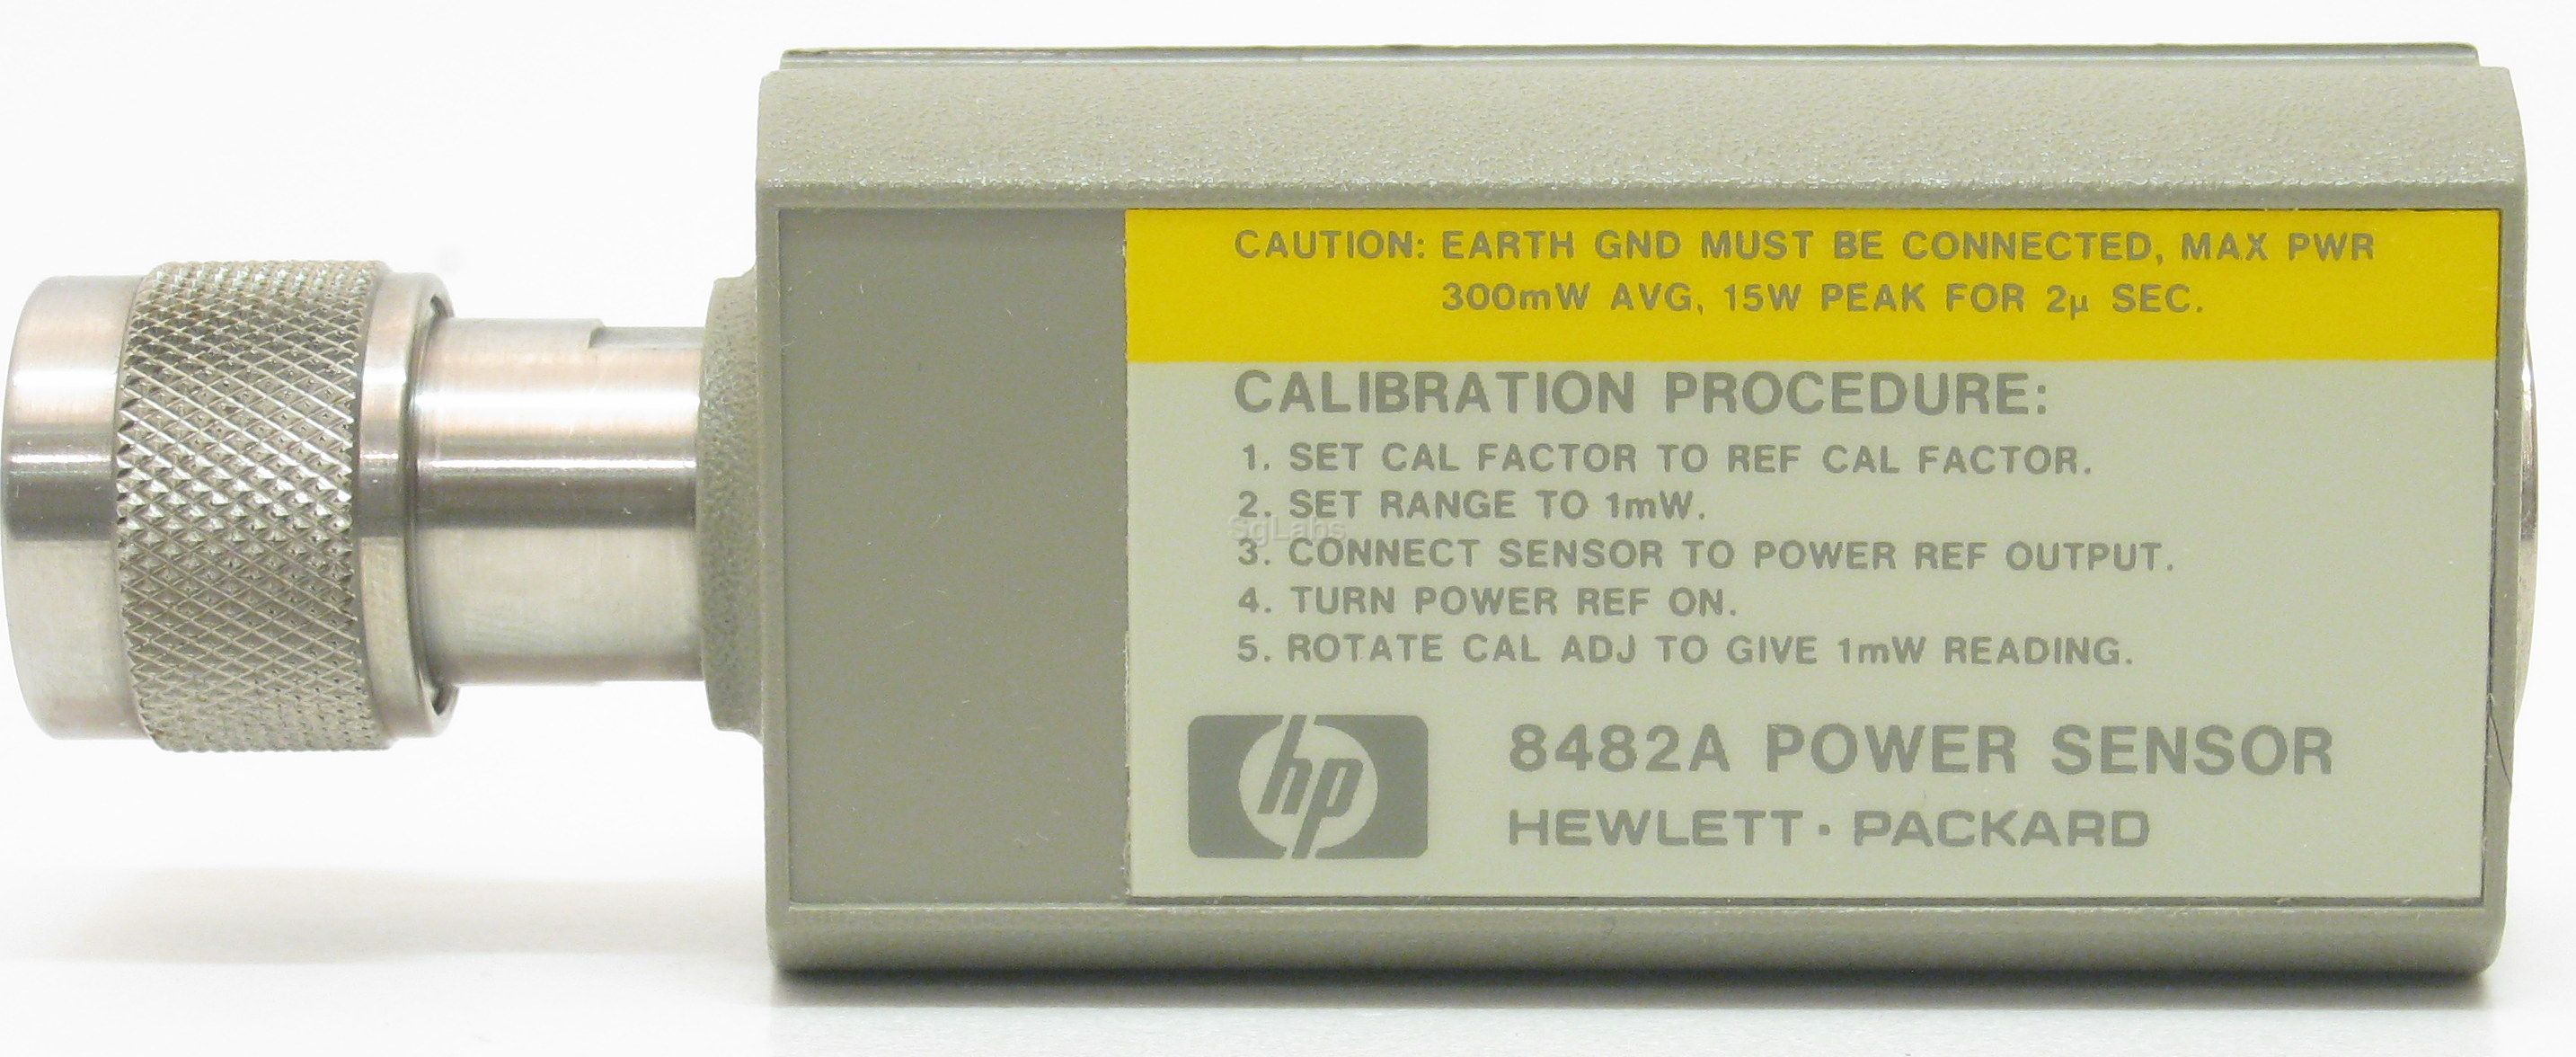 HP 8482A Power Sensor for sale online 